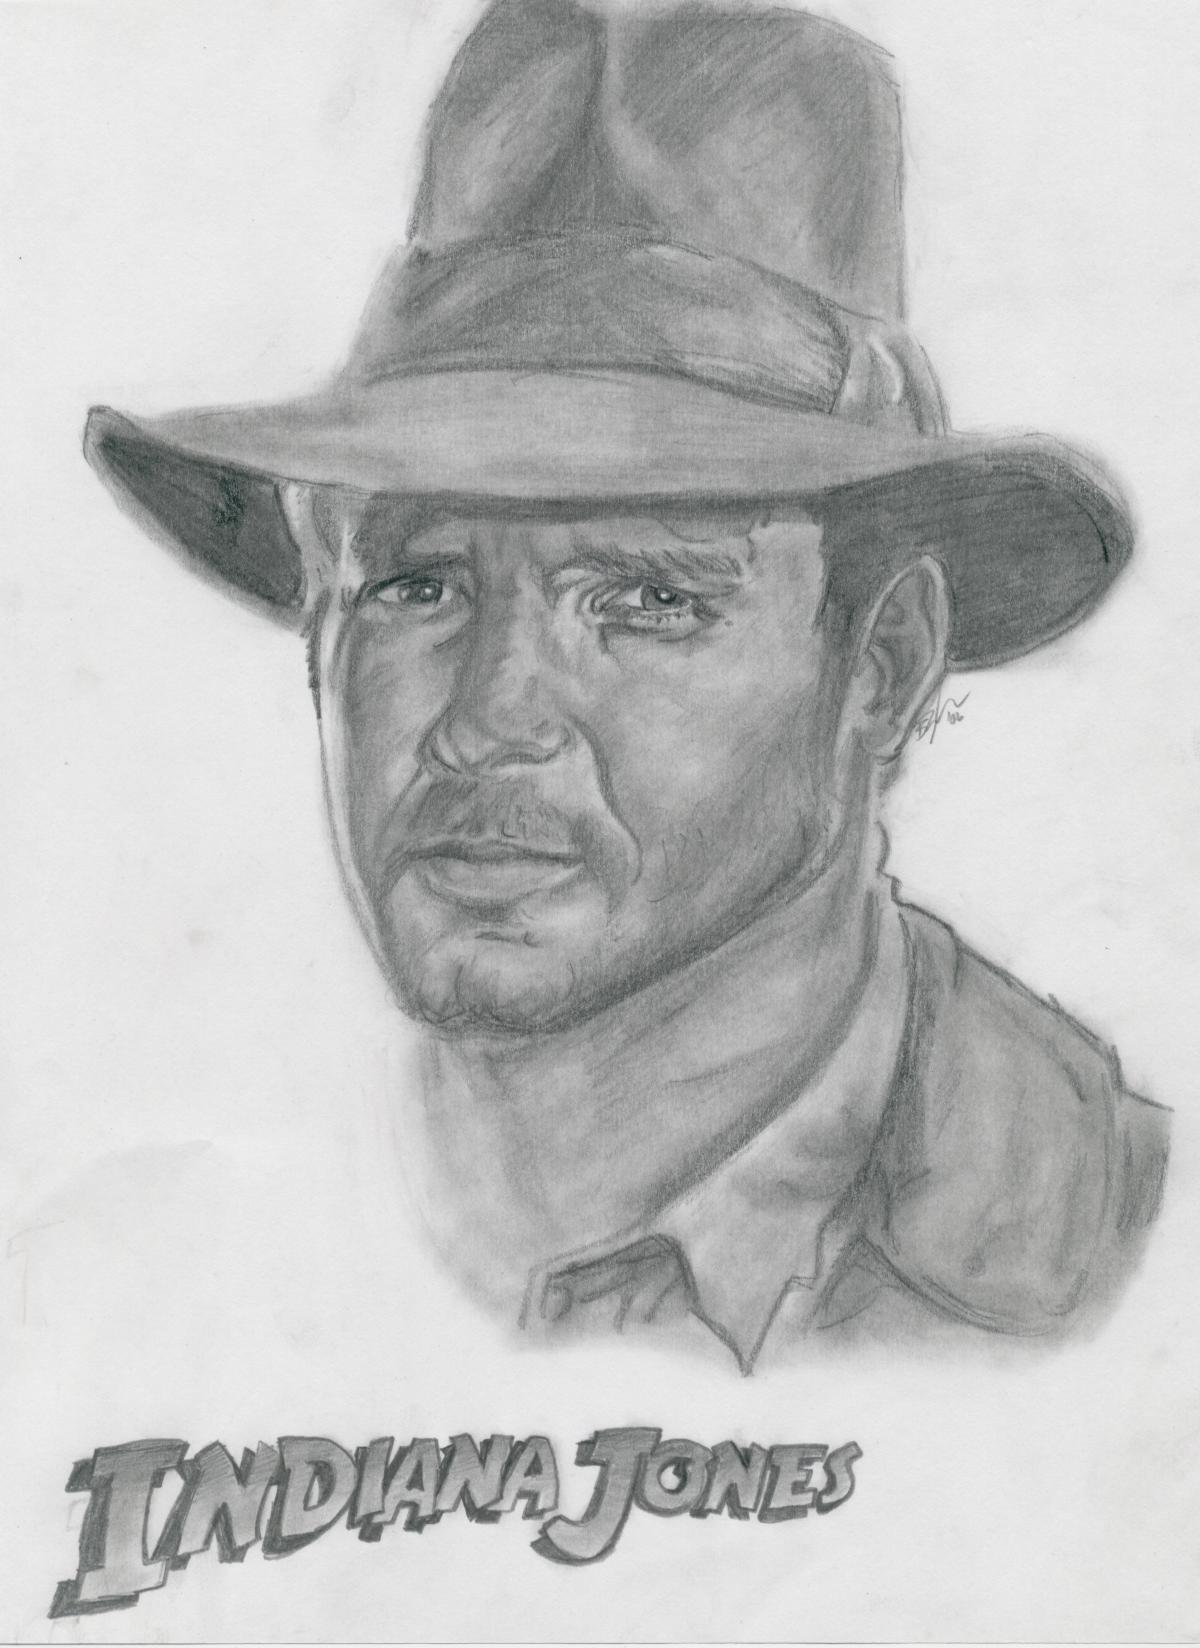 Indiana Jones by Beccaphanatic